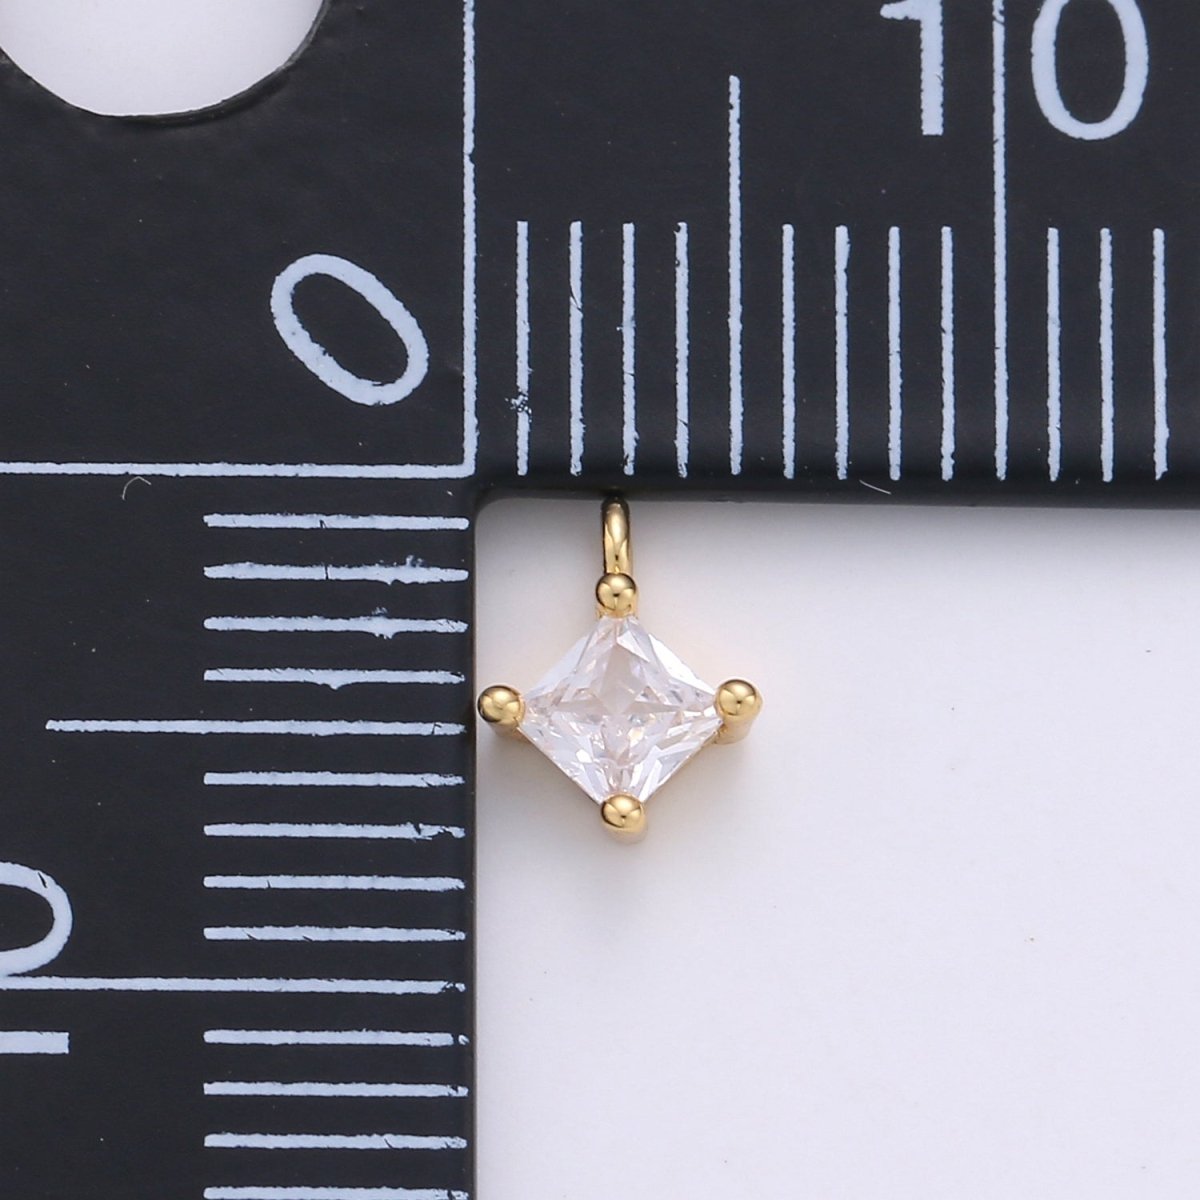 Tiny Diamond Shape Charm, Micro Pave CZ Charm, 18K Gold Filled Pendant Dainty Love Minimalist Necklace Charm for Jewelry Making | C-117 C-377 - DLUXCA